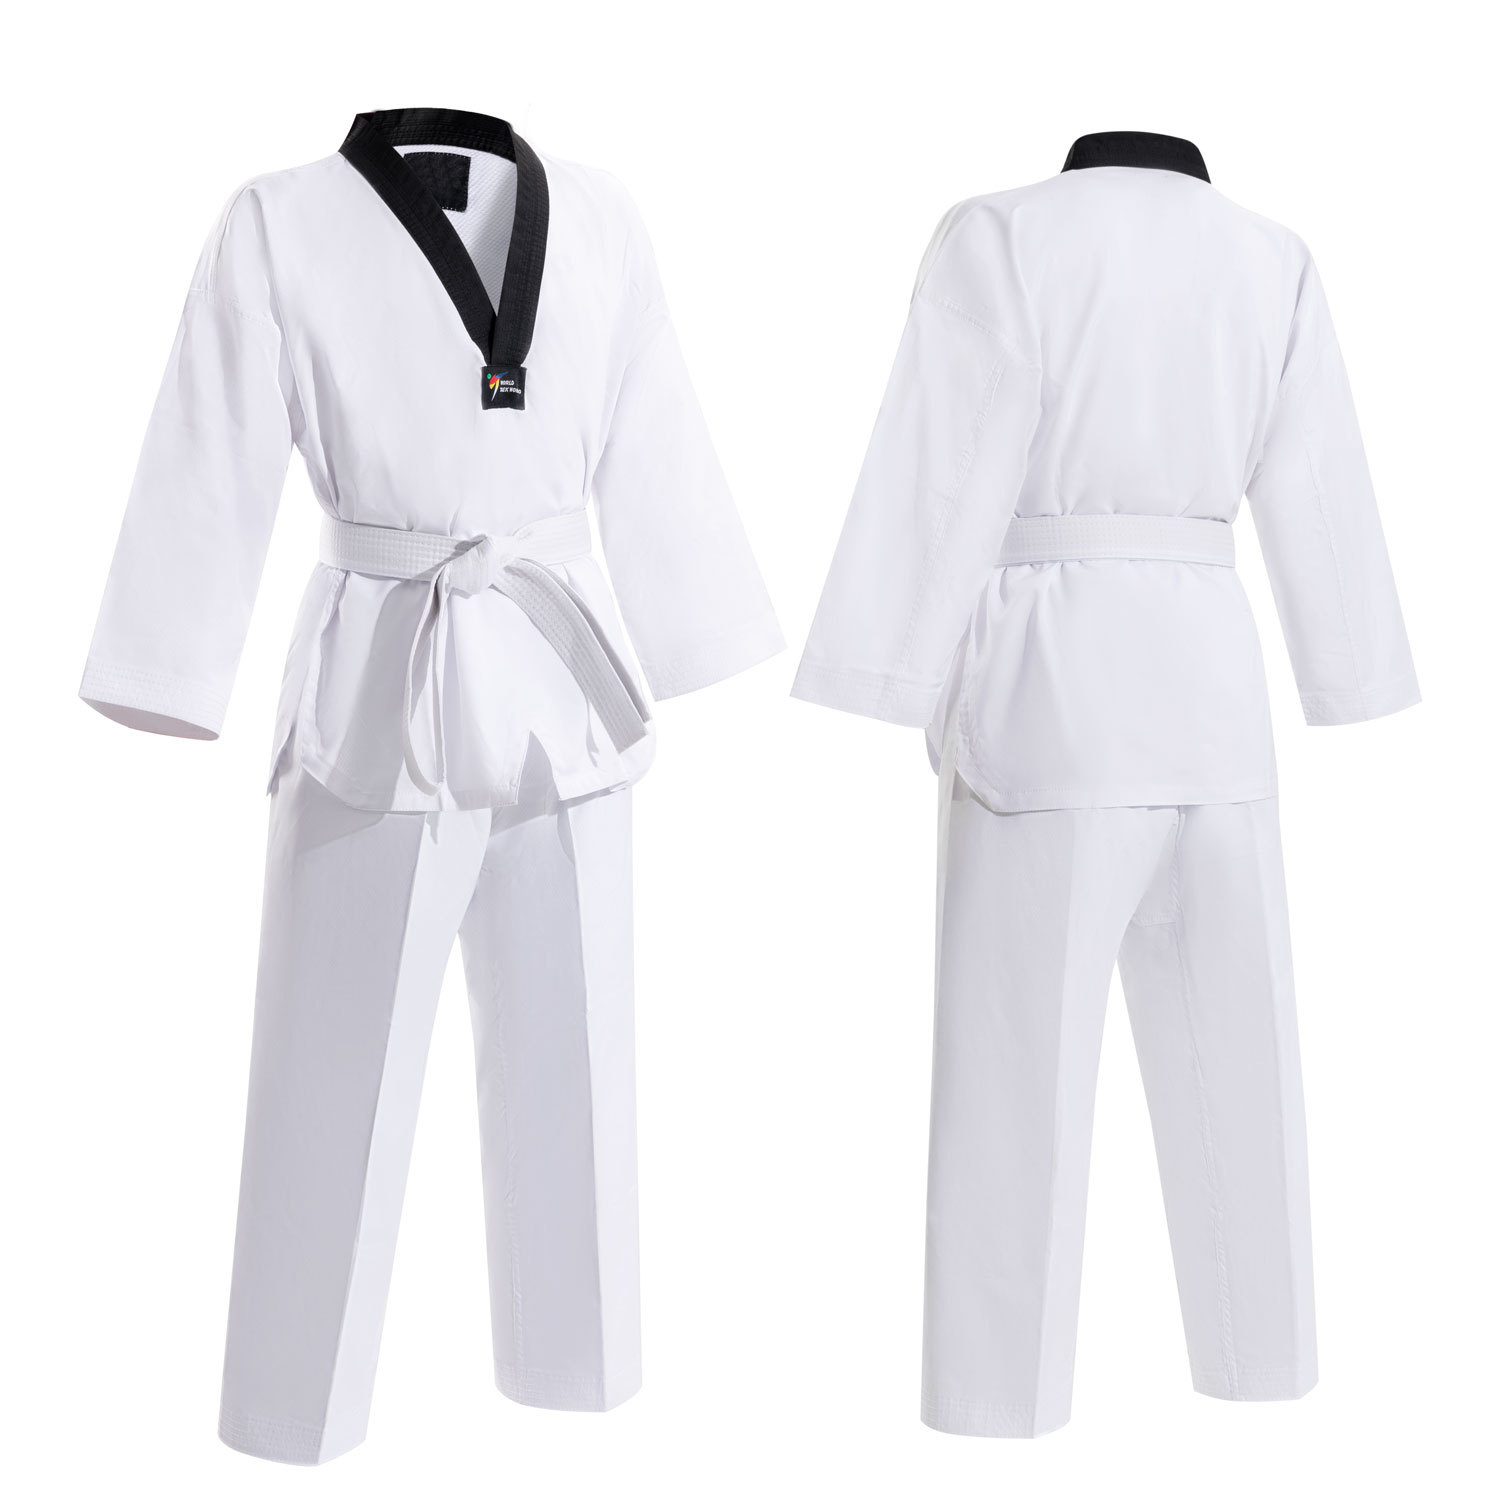 karate Training Equipment Light Weight Martial Arts Suits Gi Traditional Sport 12oz Karate Uniform